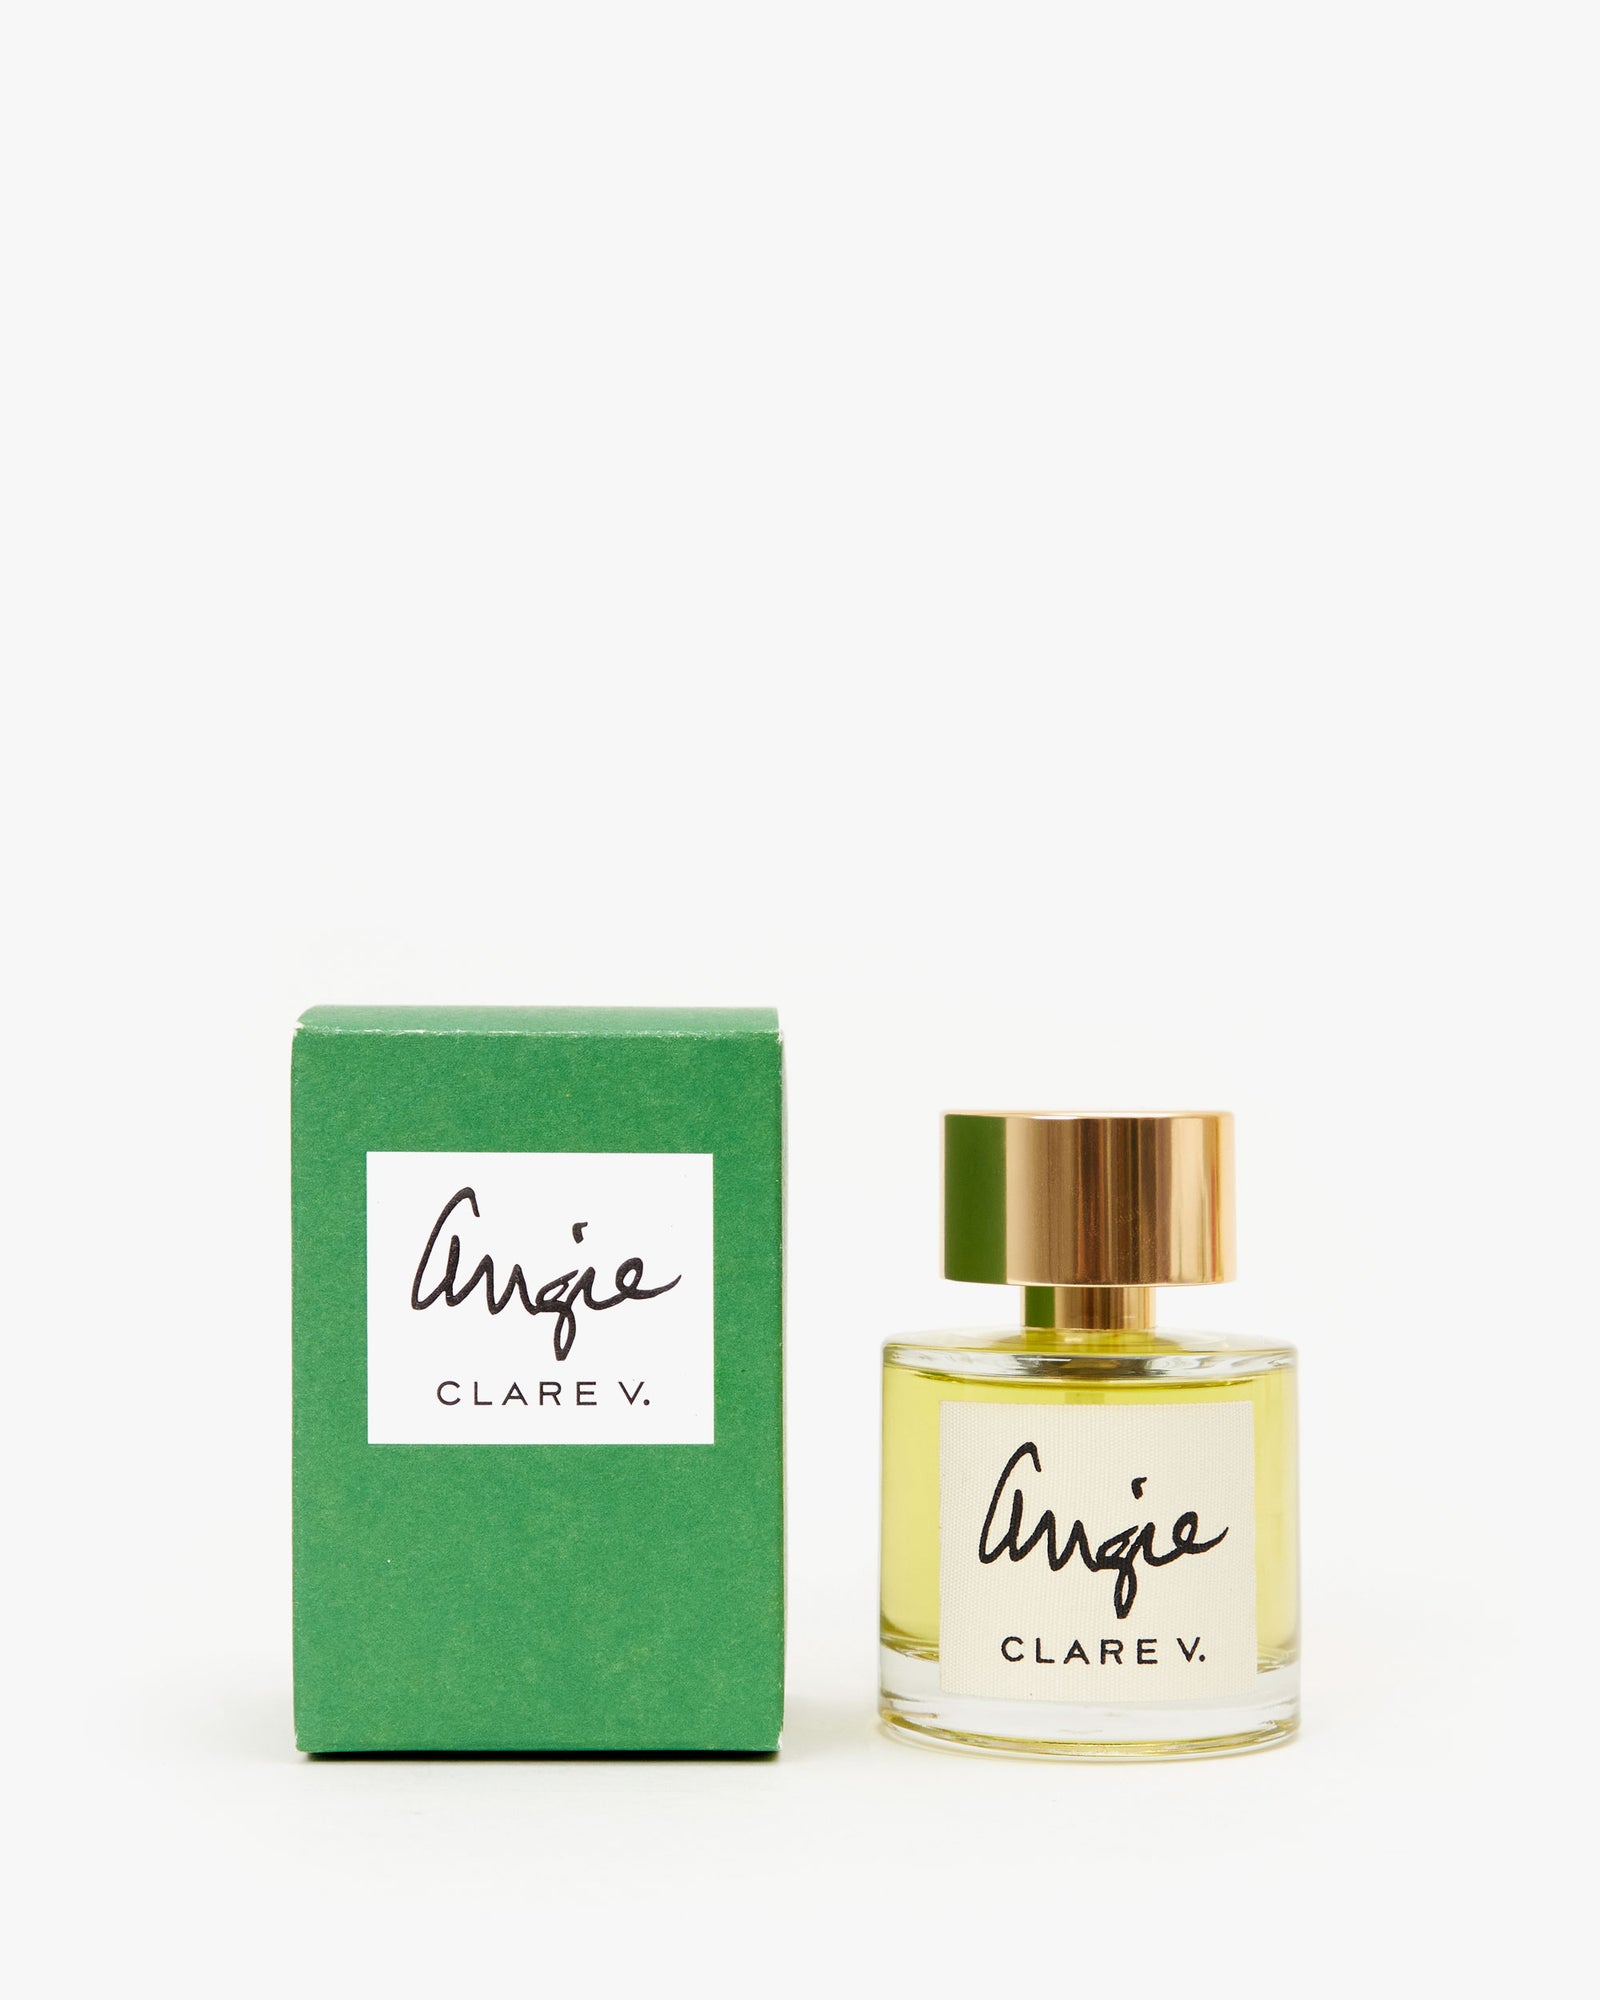 Angie Eau de Parfum next to its green box